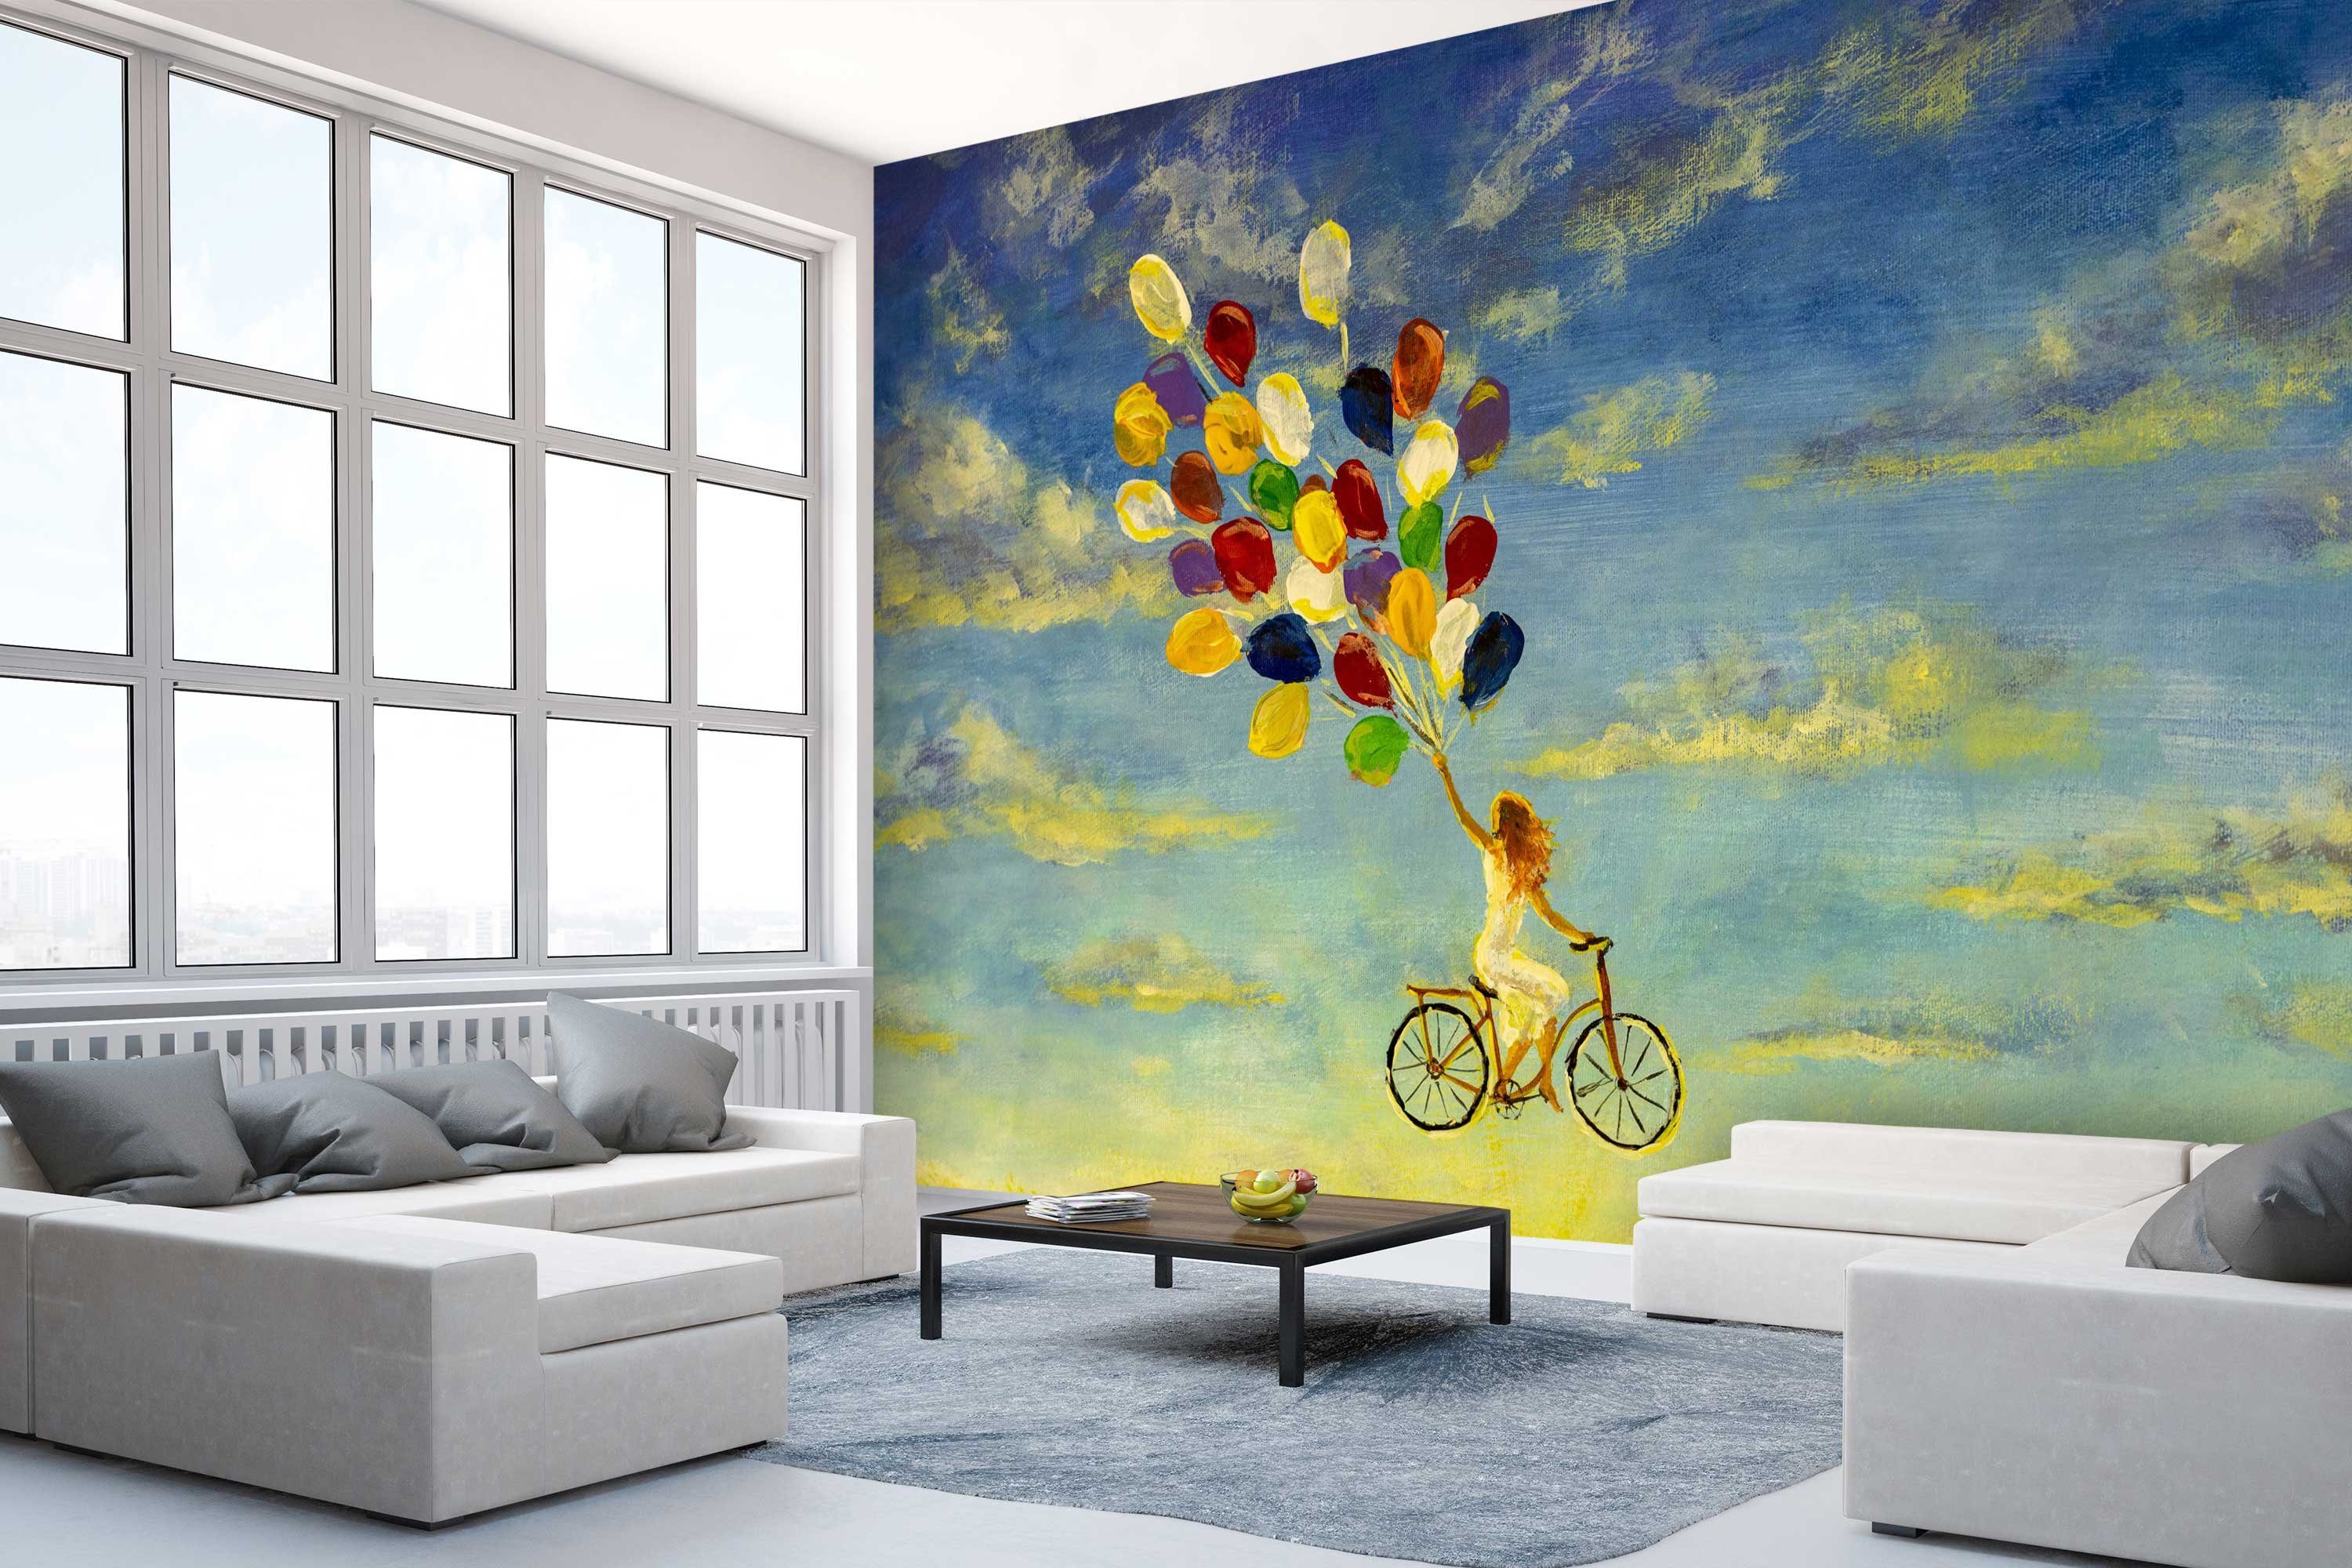 Luftballons auf Frau Gemälde mit Motivtapete, Fototapete matt, Fahrrad, wandmotiv24 glatt, Wandtapete, Vliestapete